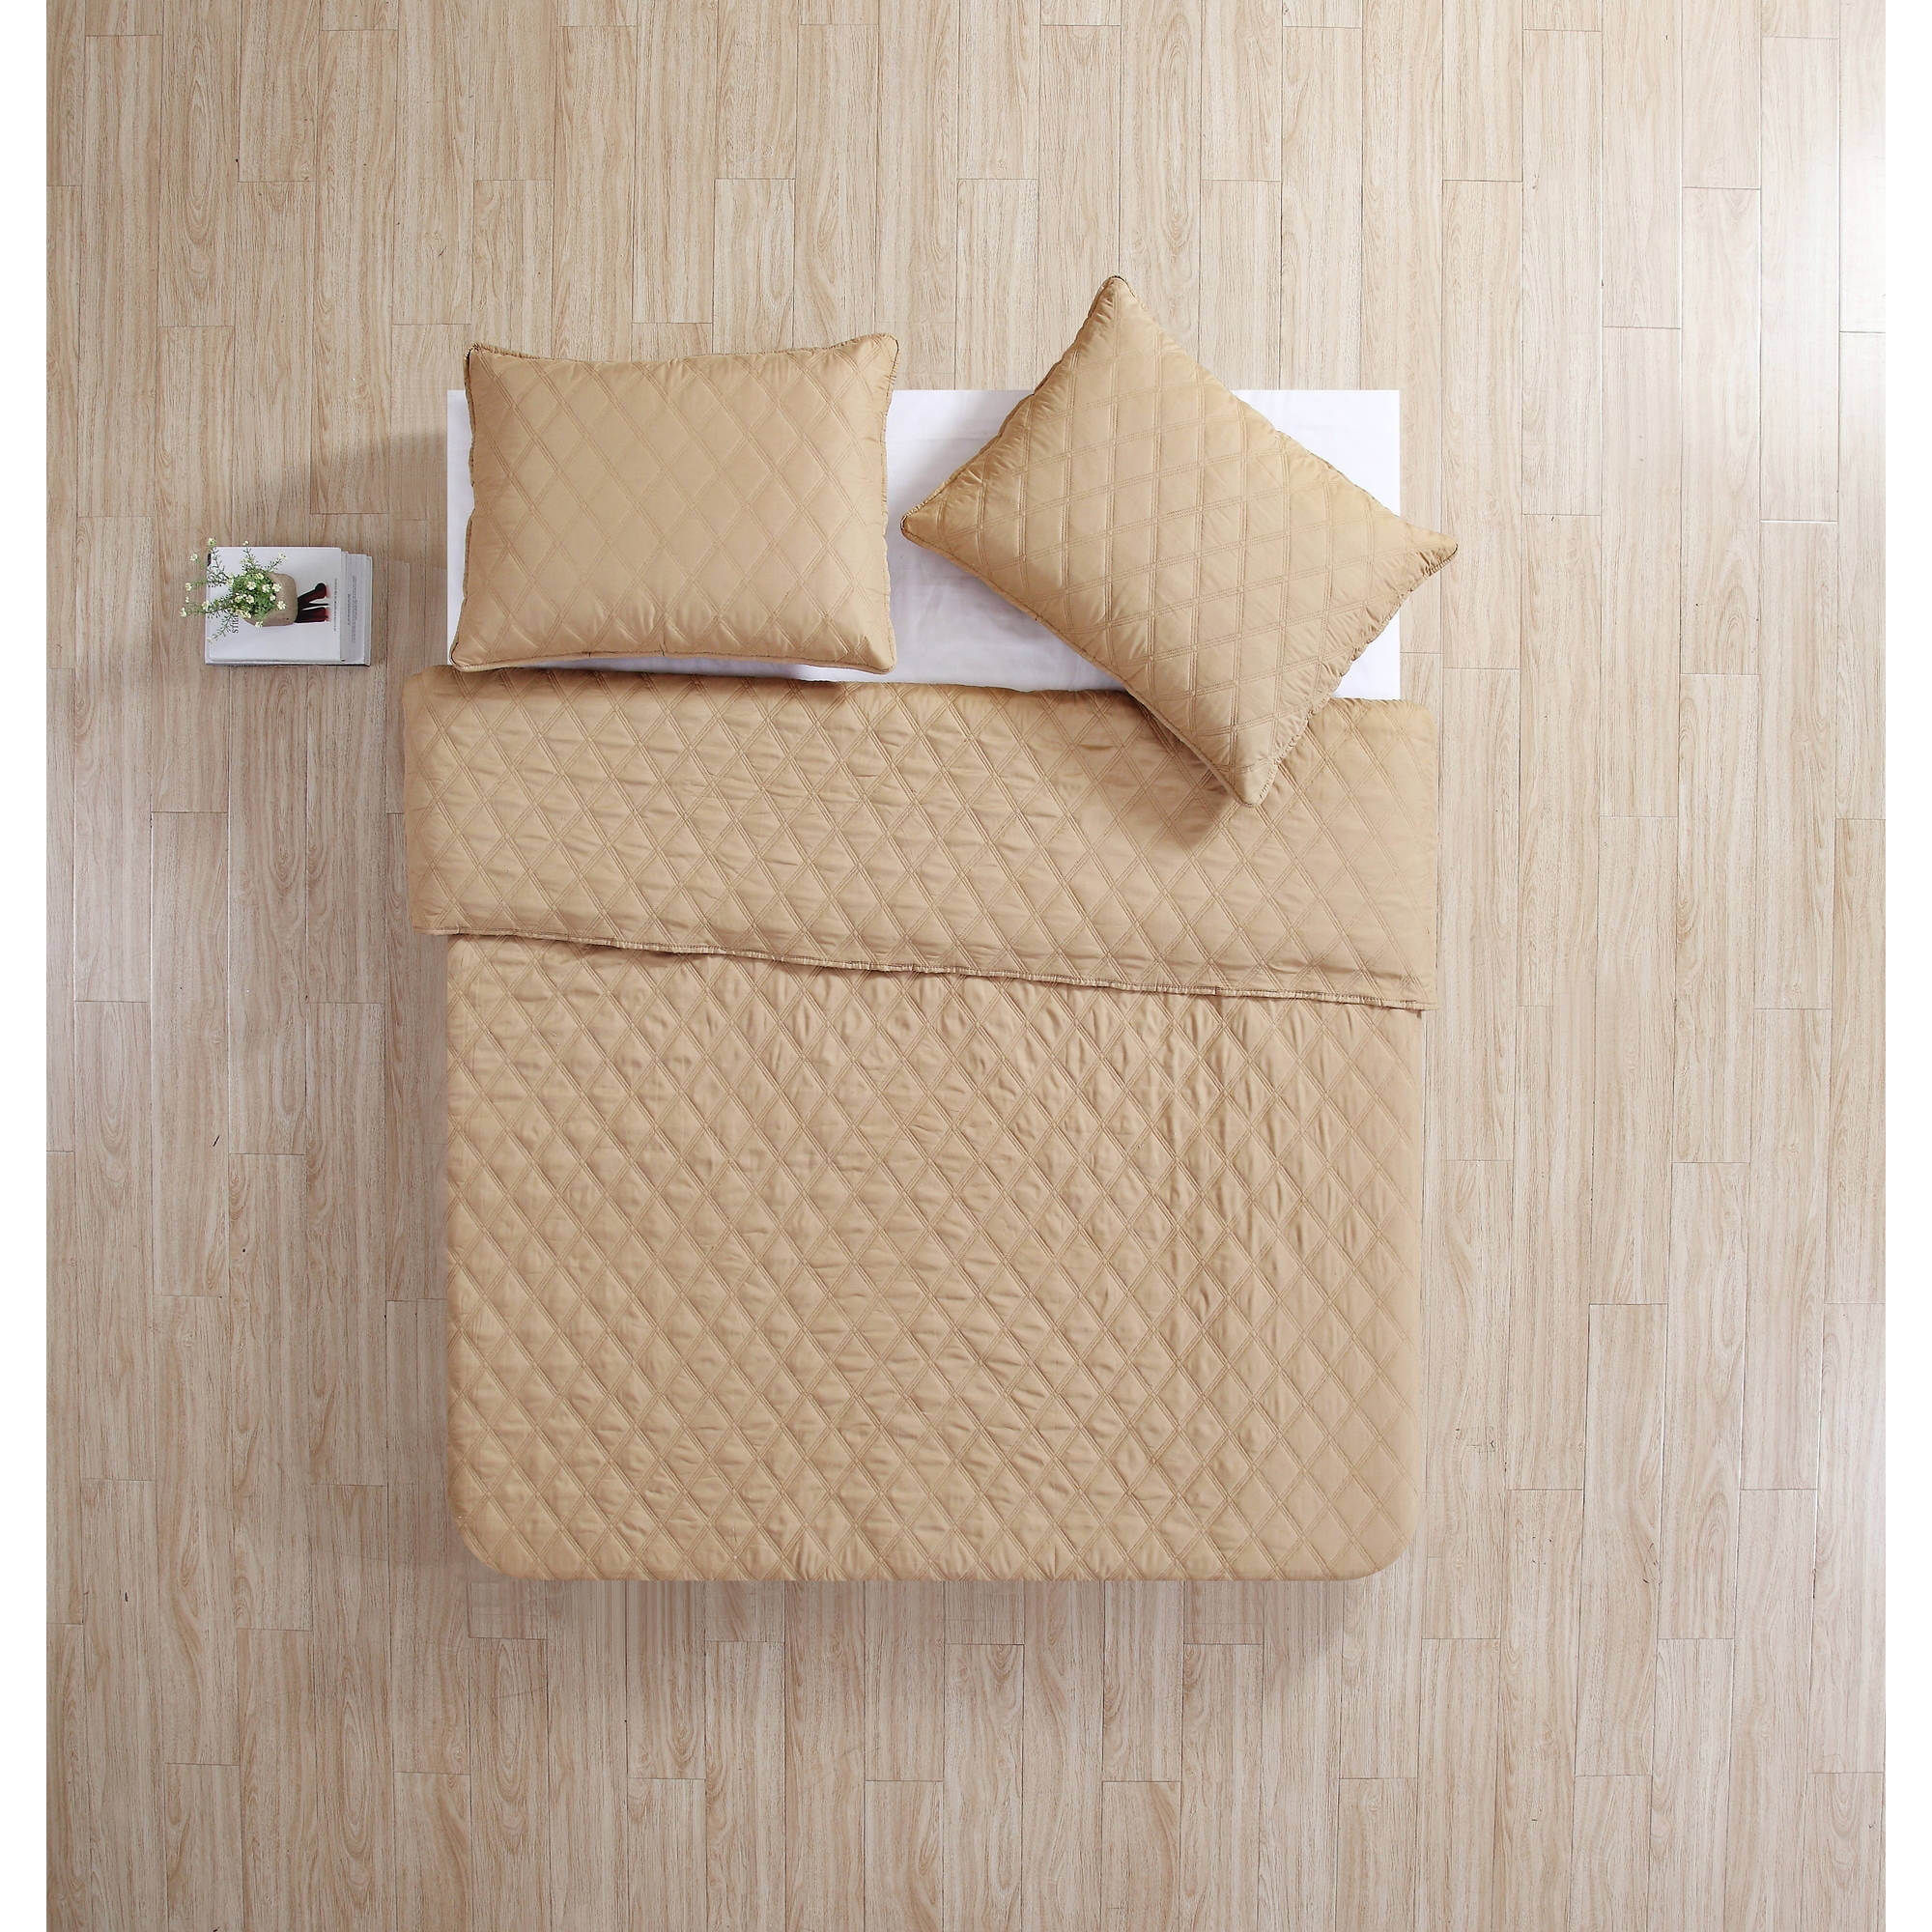 King VCNY Home Buckingham Coverlet with 2 Pillow Shams Set Aqua